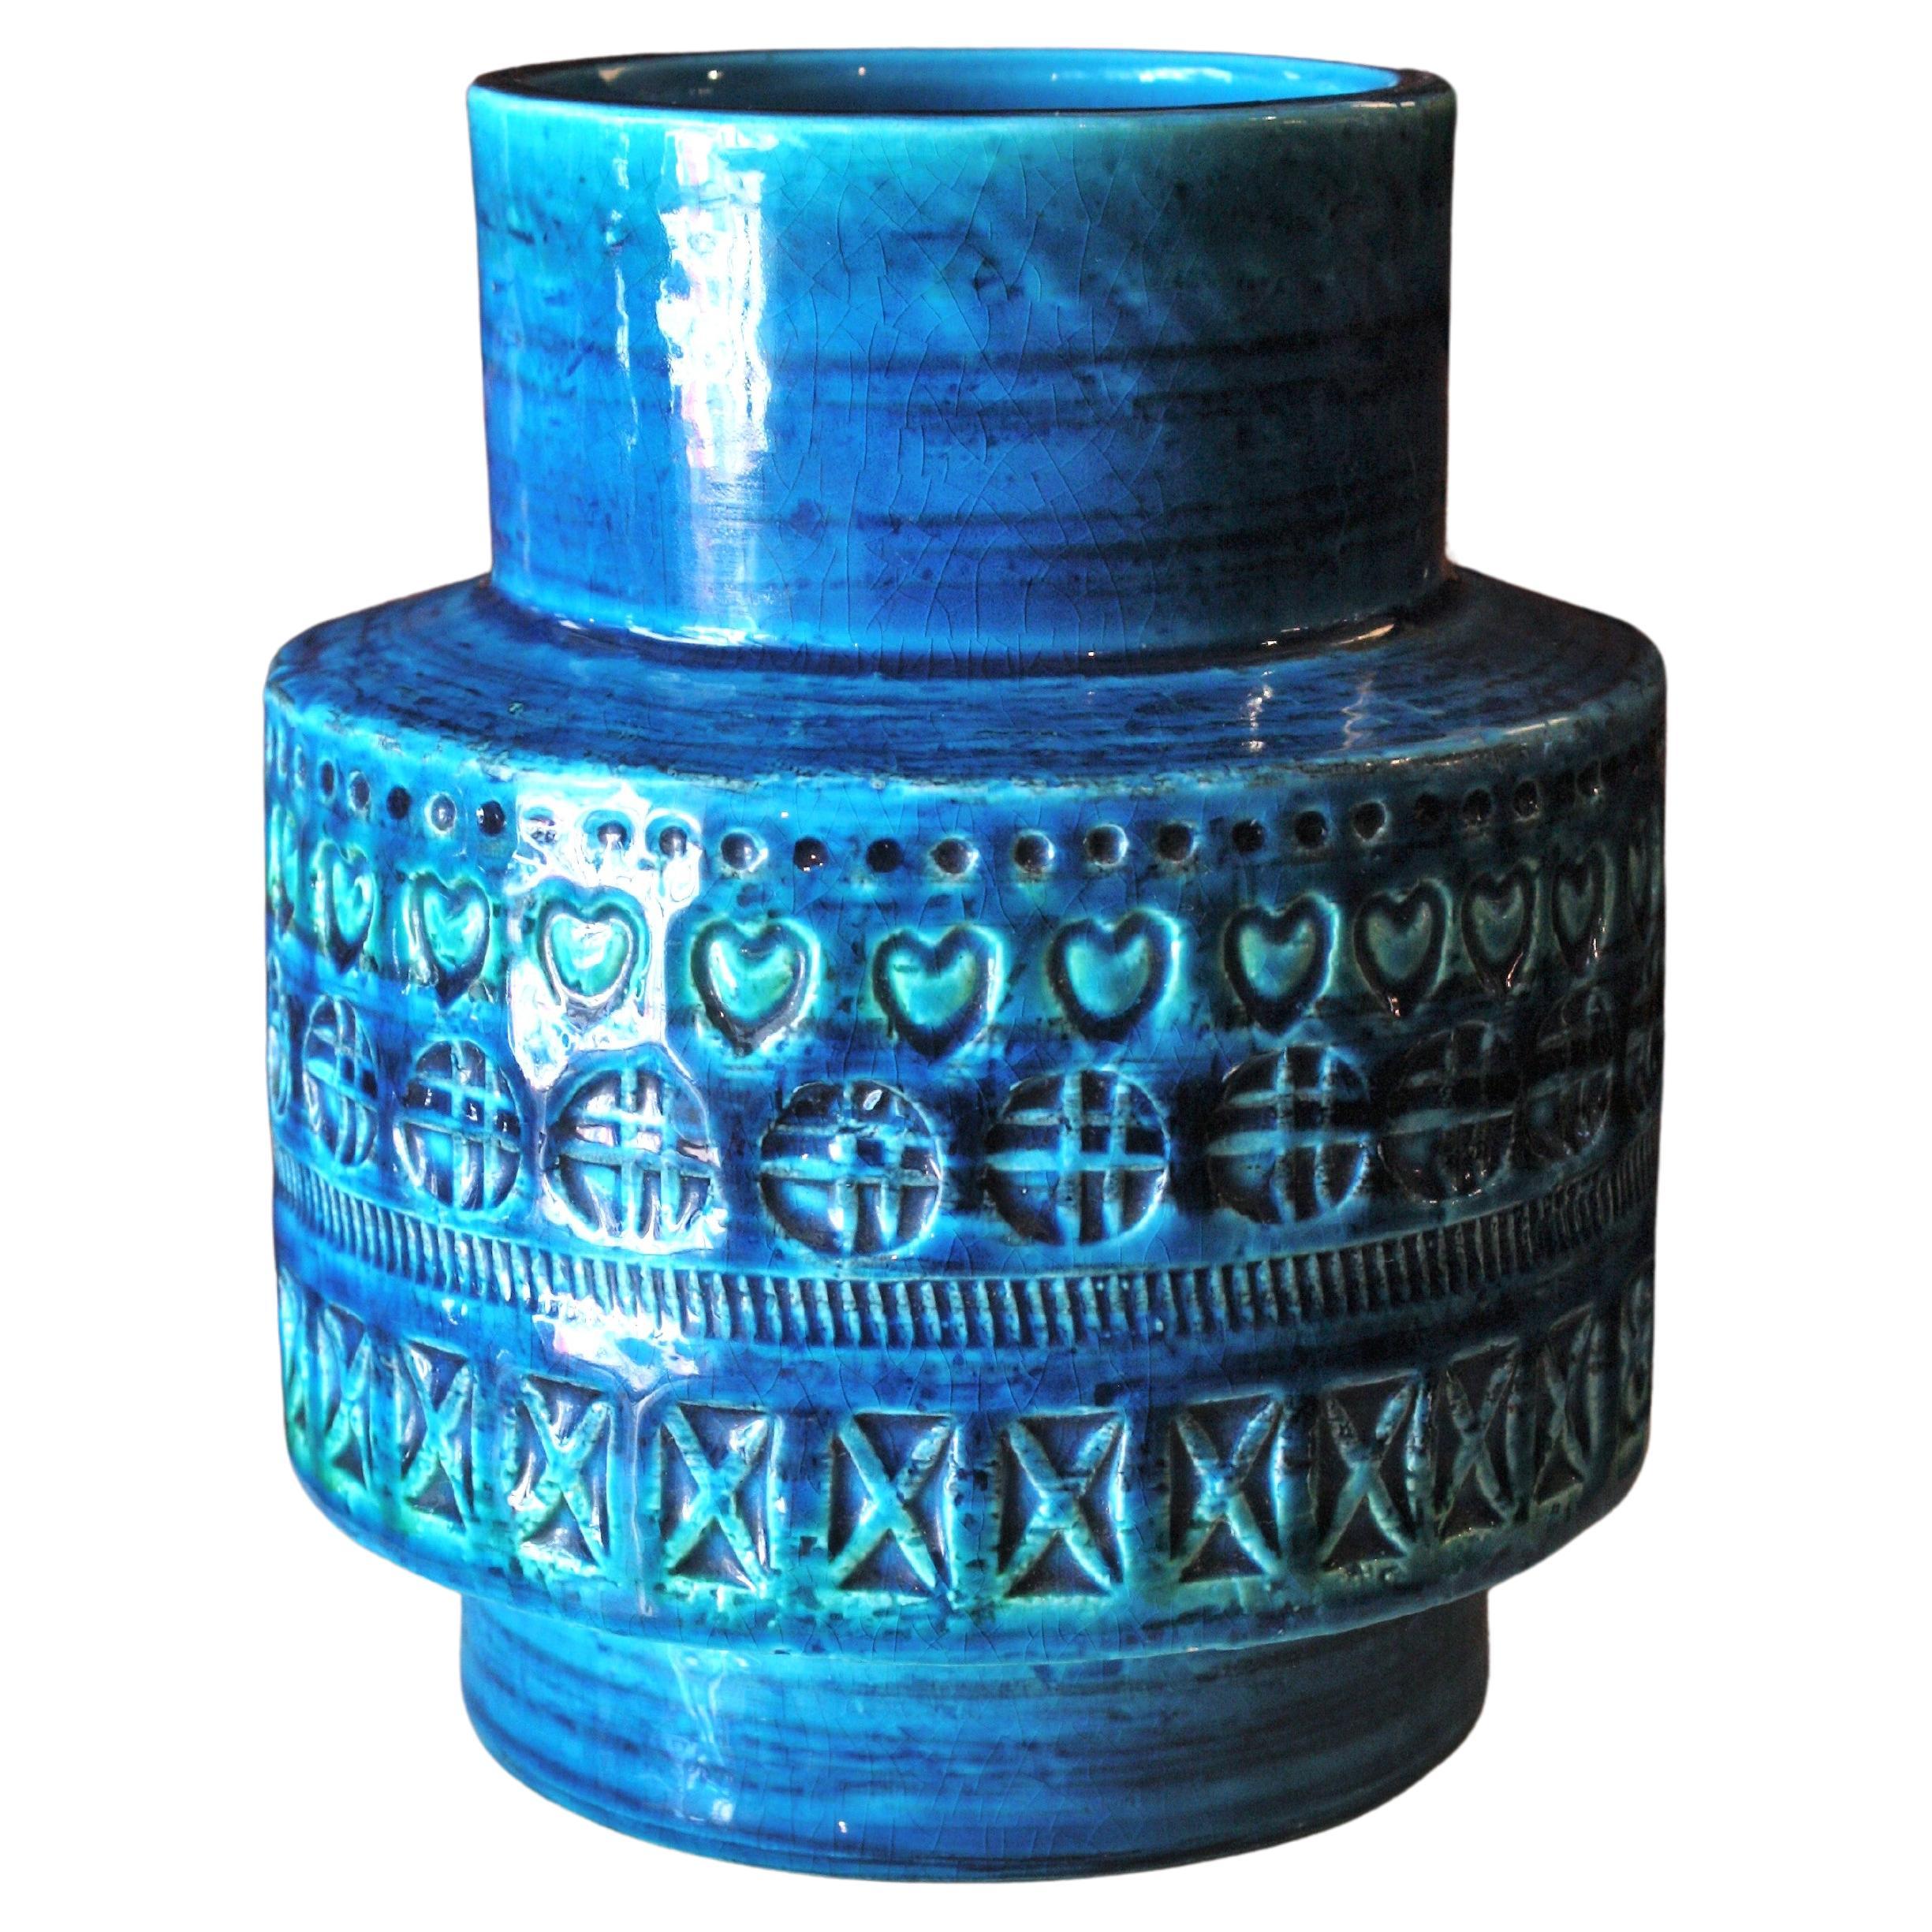 Blau glasierte Bitossi Aldo Londi Rimini-Keramikvase aus der Mitte des Jahrhunderts